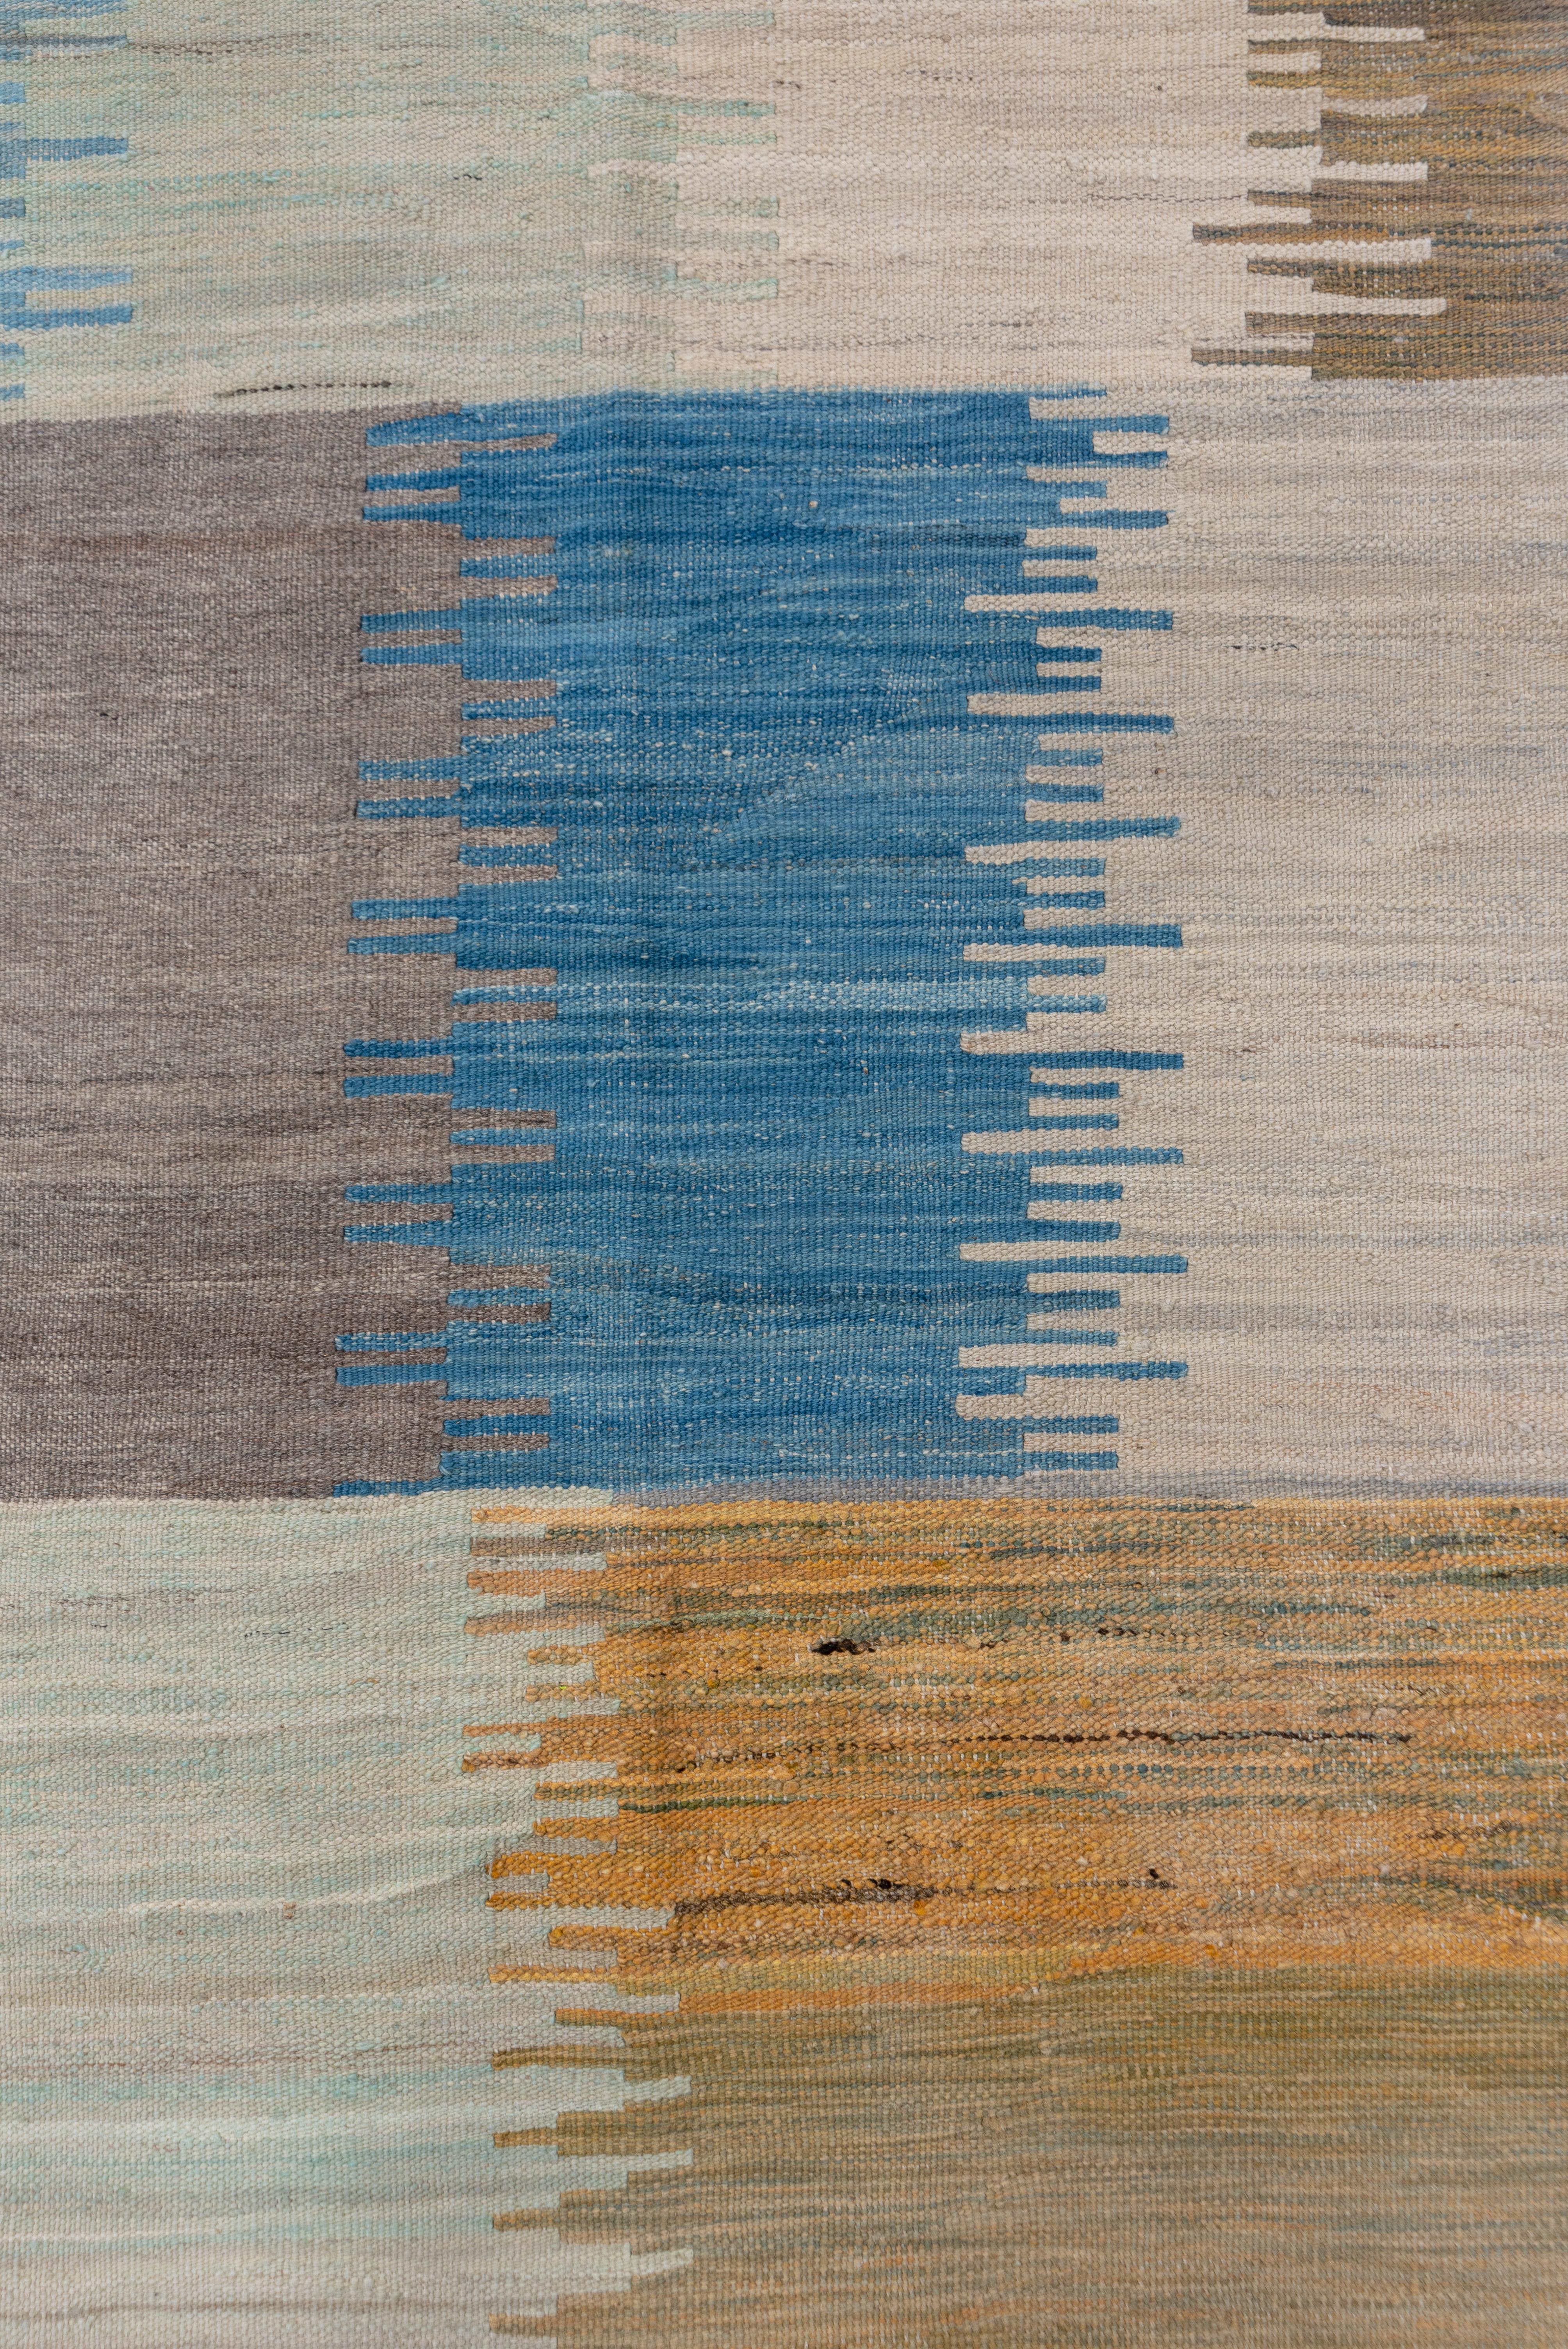 Hand-Woven Modern Scandinavian Style Flatweave Rug, Blue Ivory & Citron Tones